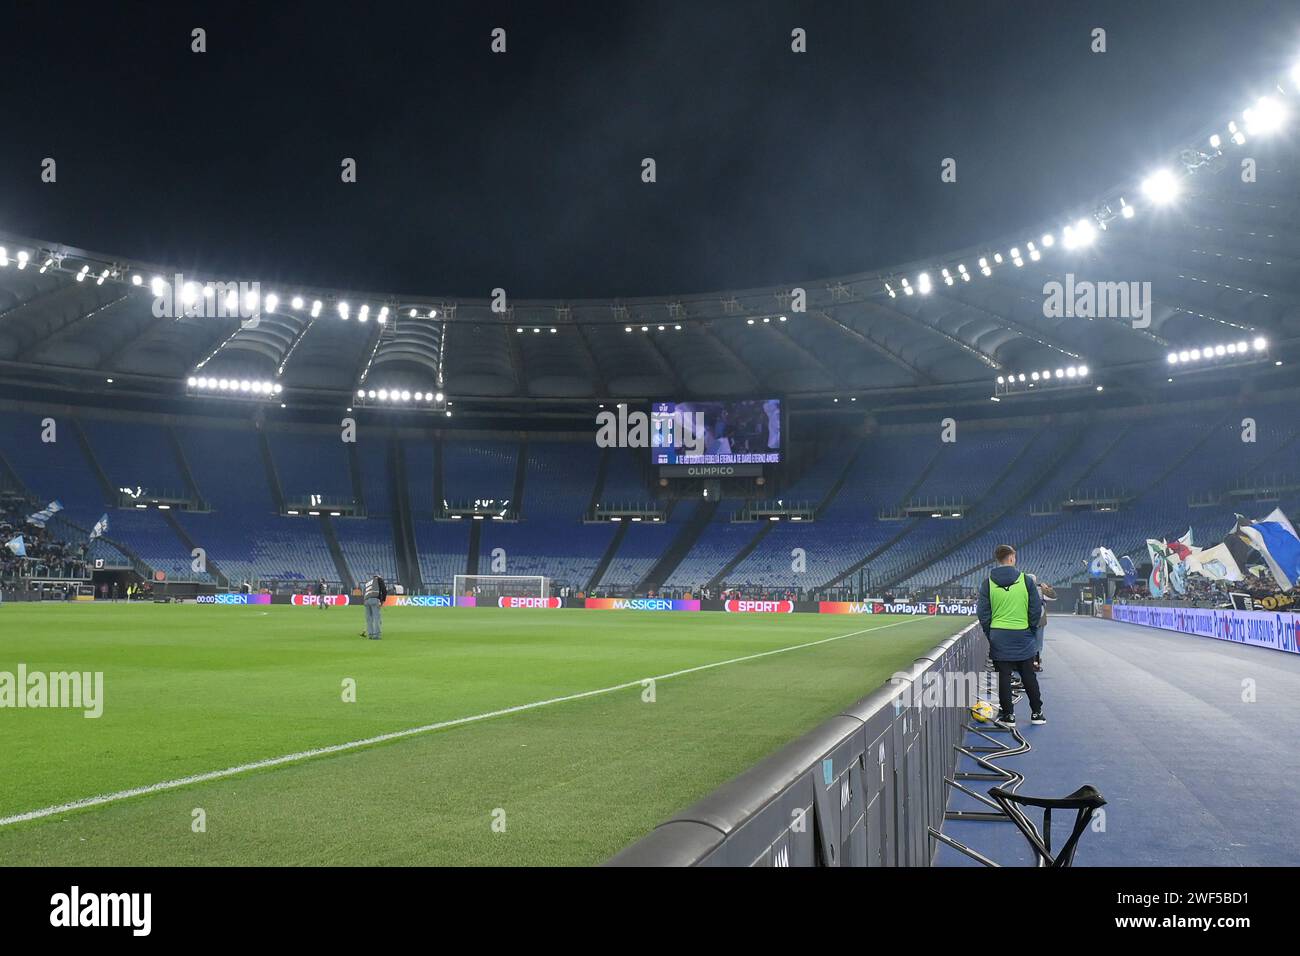 Lazio stadio olimpico view hi-res stock photography and images - Alamy